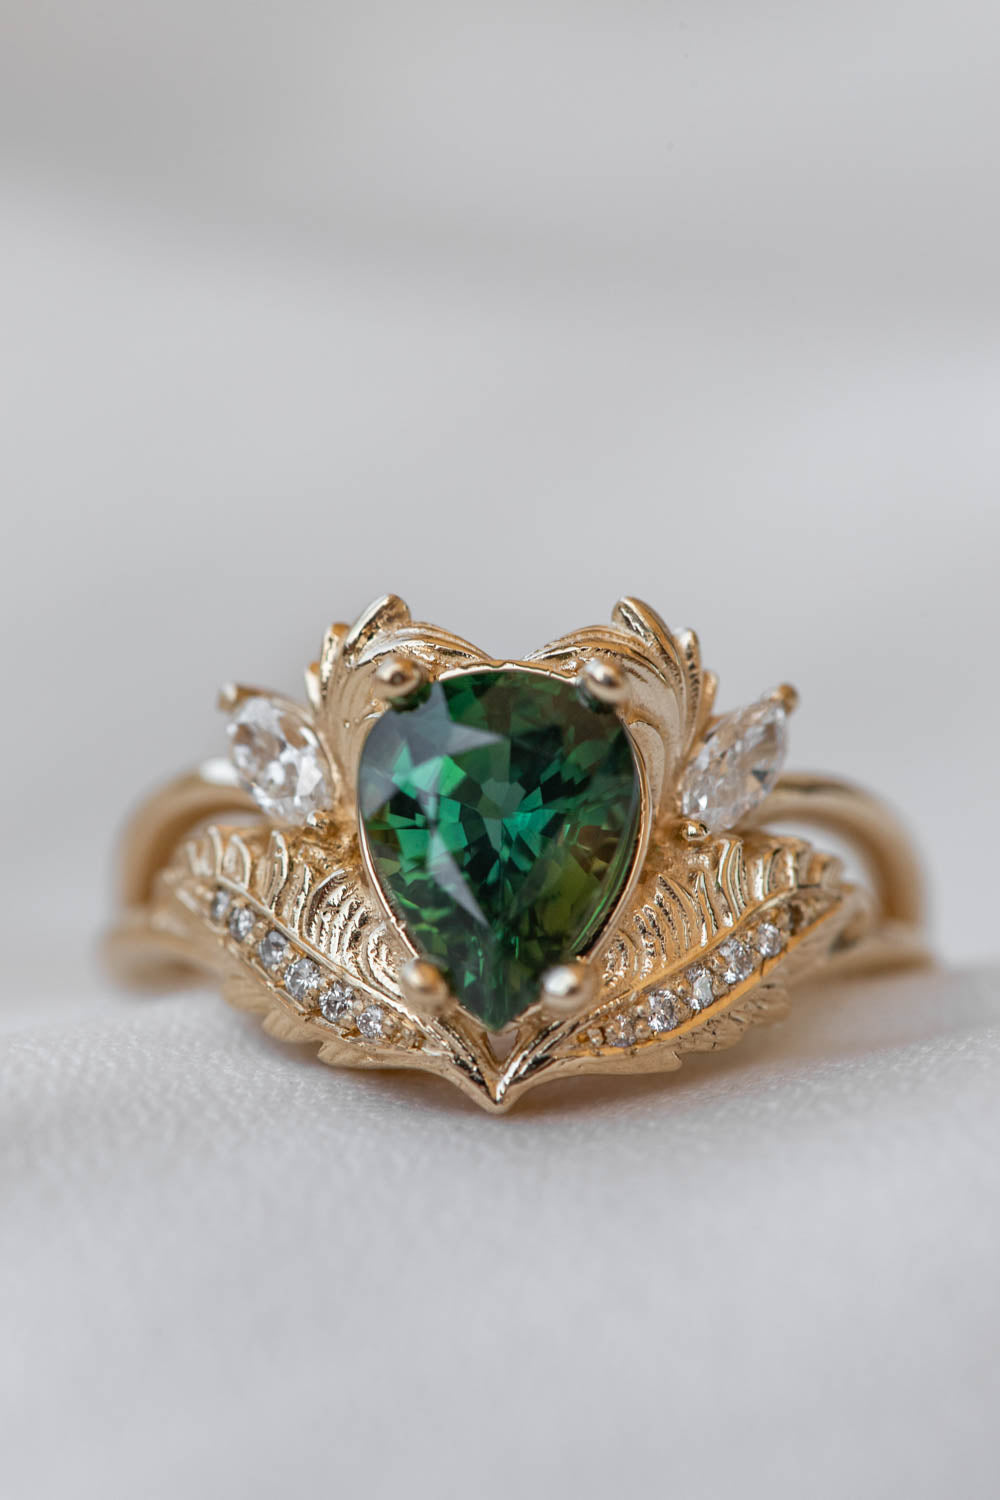 Additional fee for the gemstone upgrade, order #2093 - Eden Garden Jewelry™